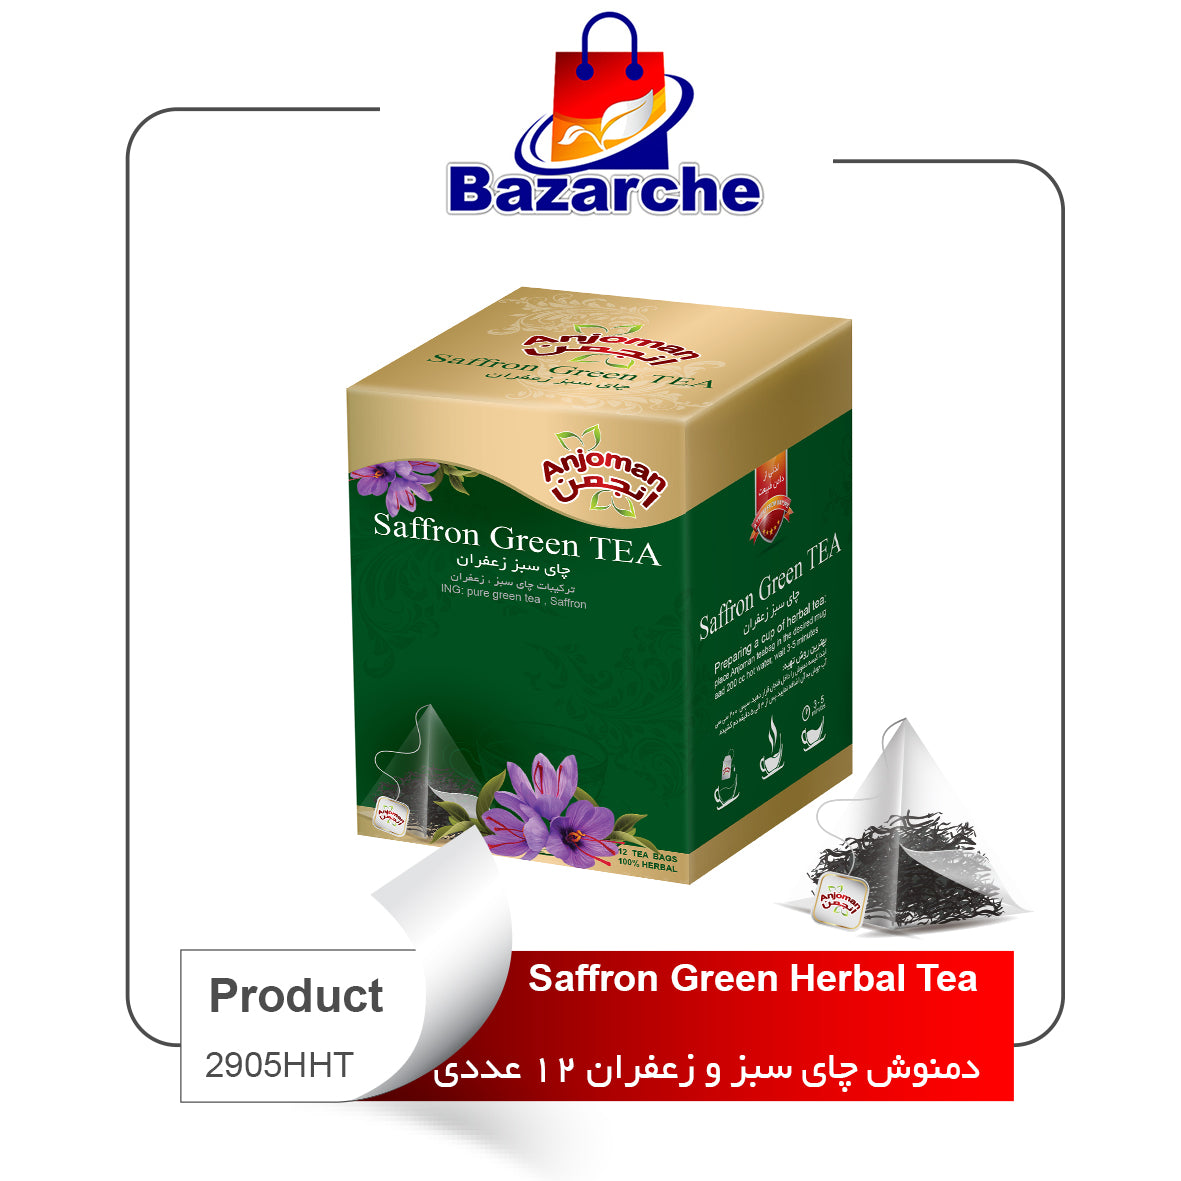 Saffron Green Herbal tea